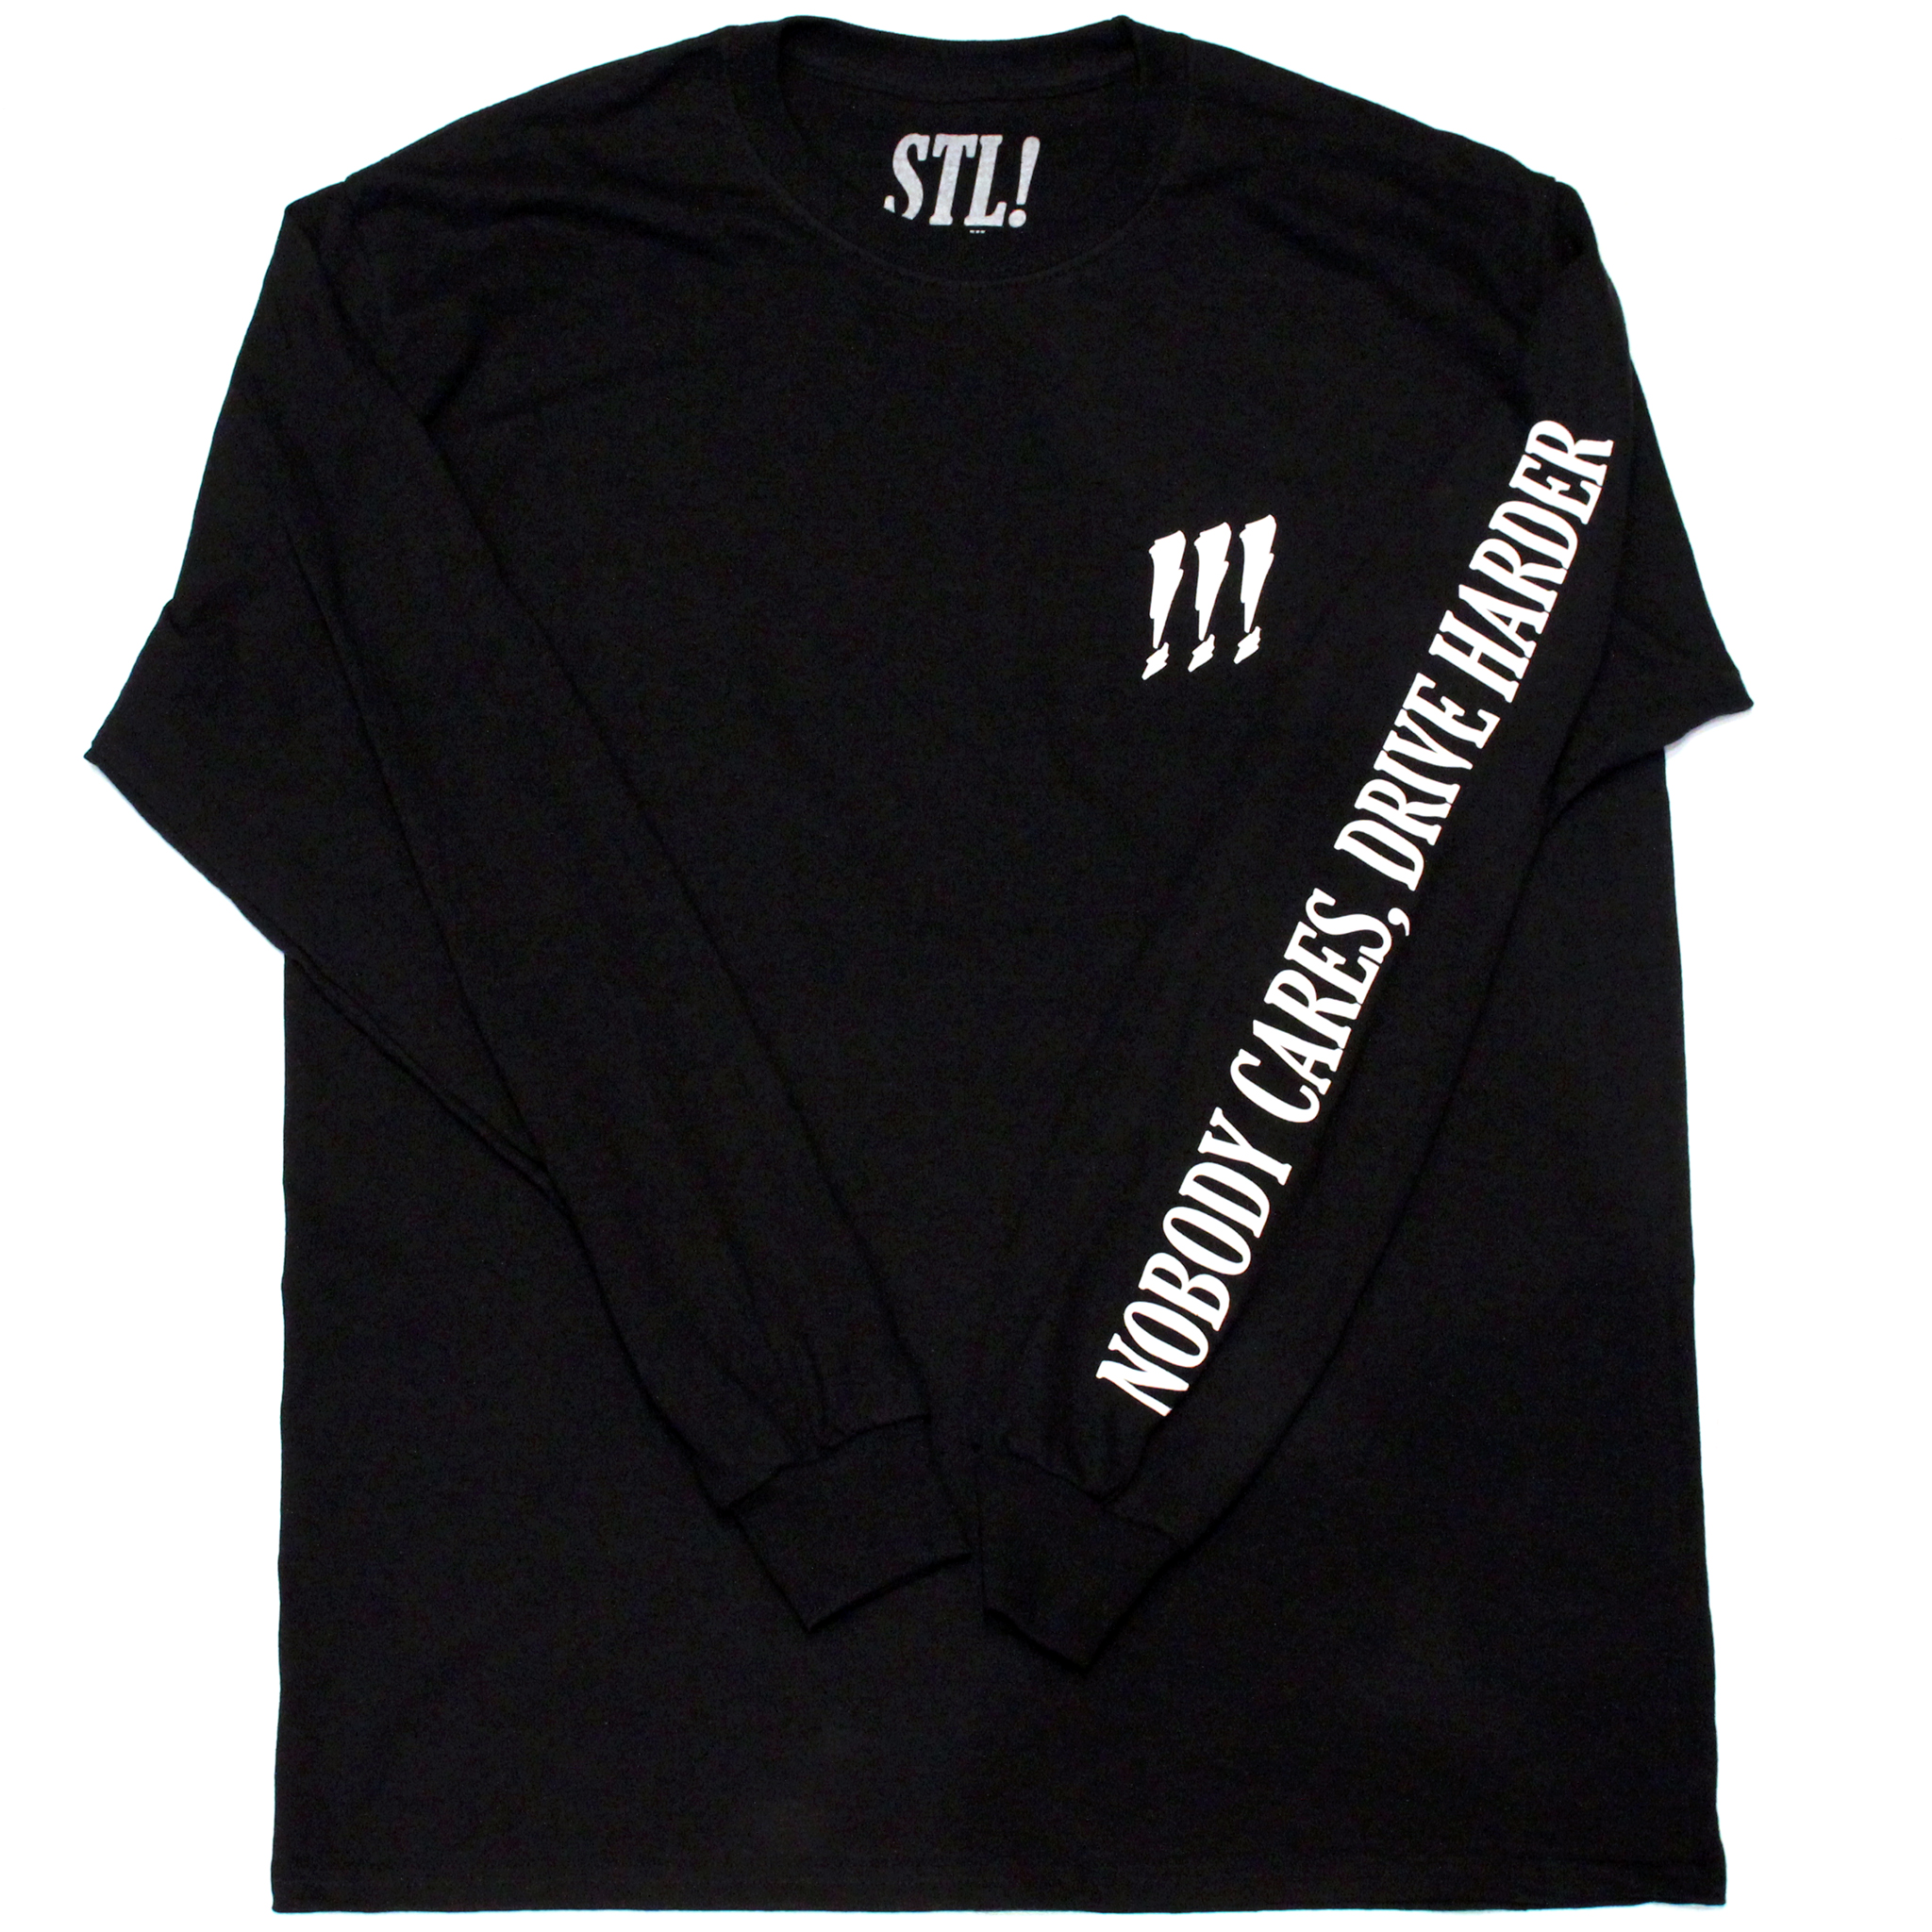 STL! Long Sleeve T-Shirt